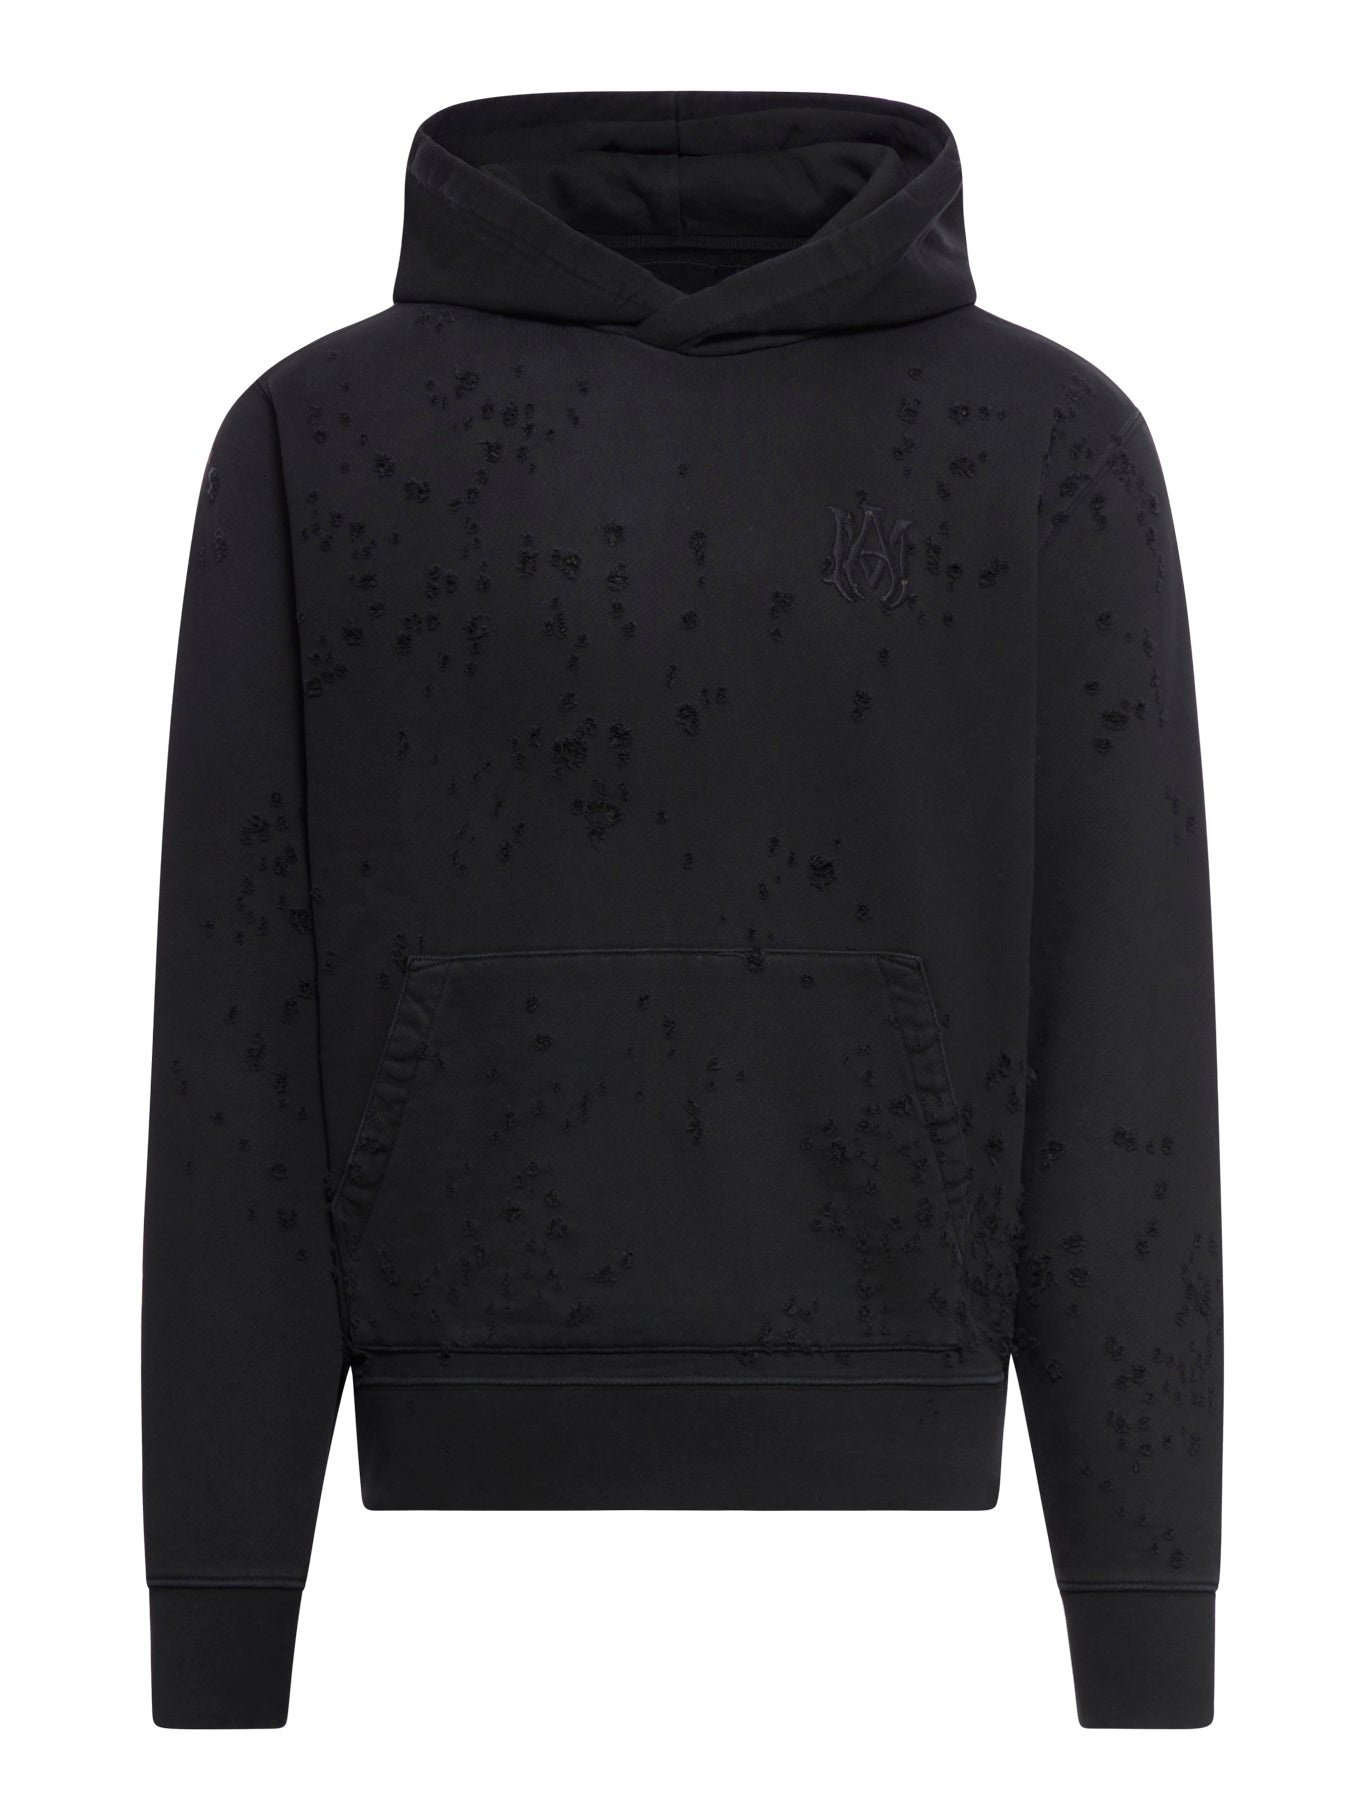 Amiri Sweatshirt With Worn Effect In Black